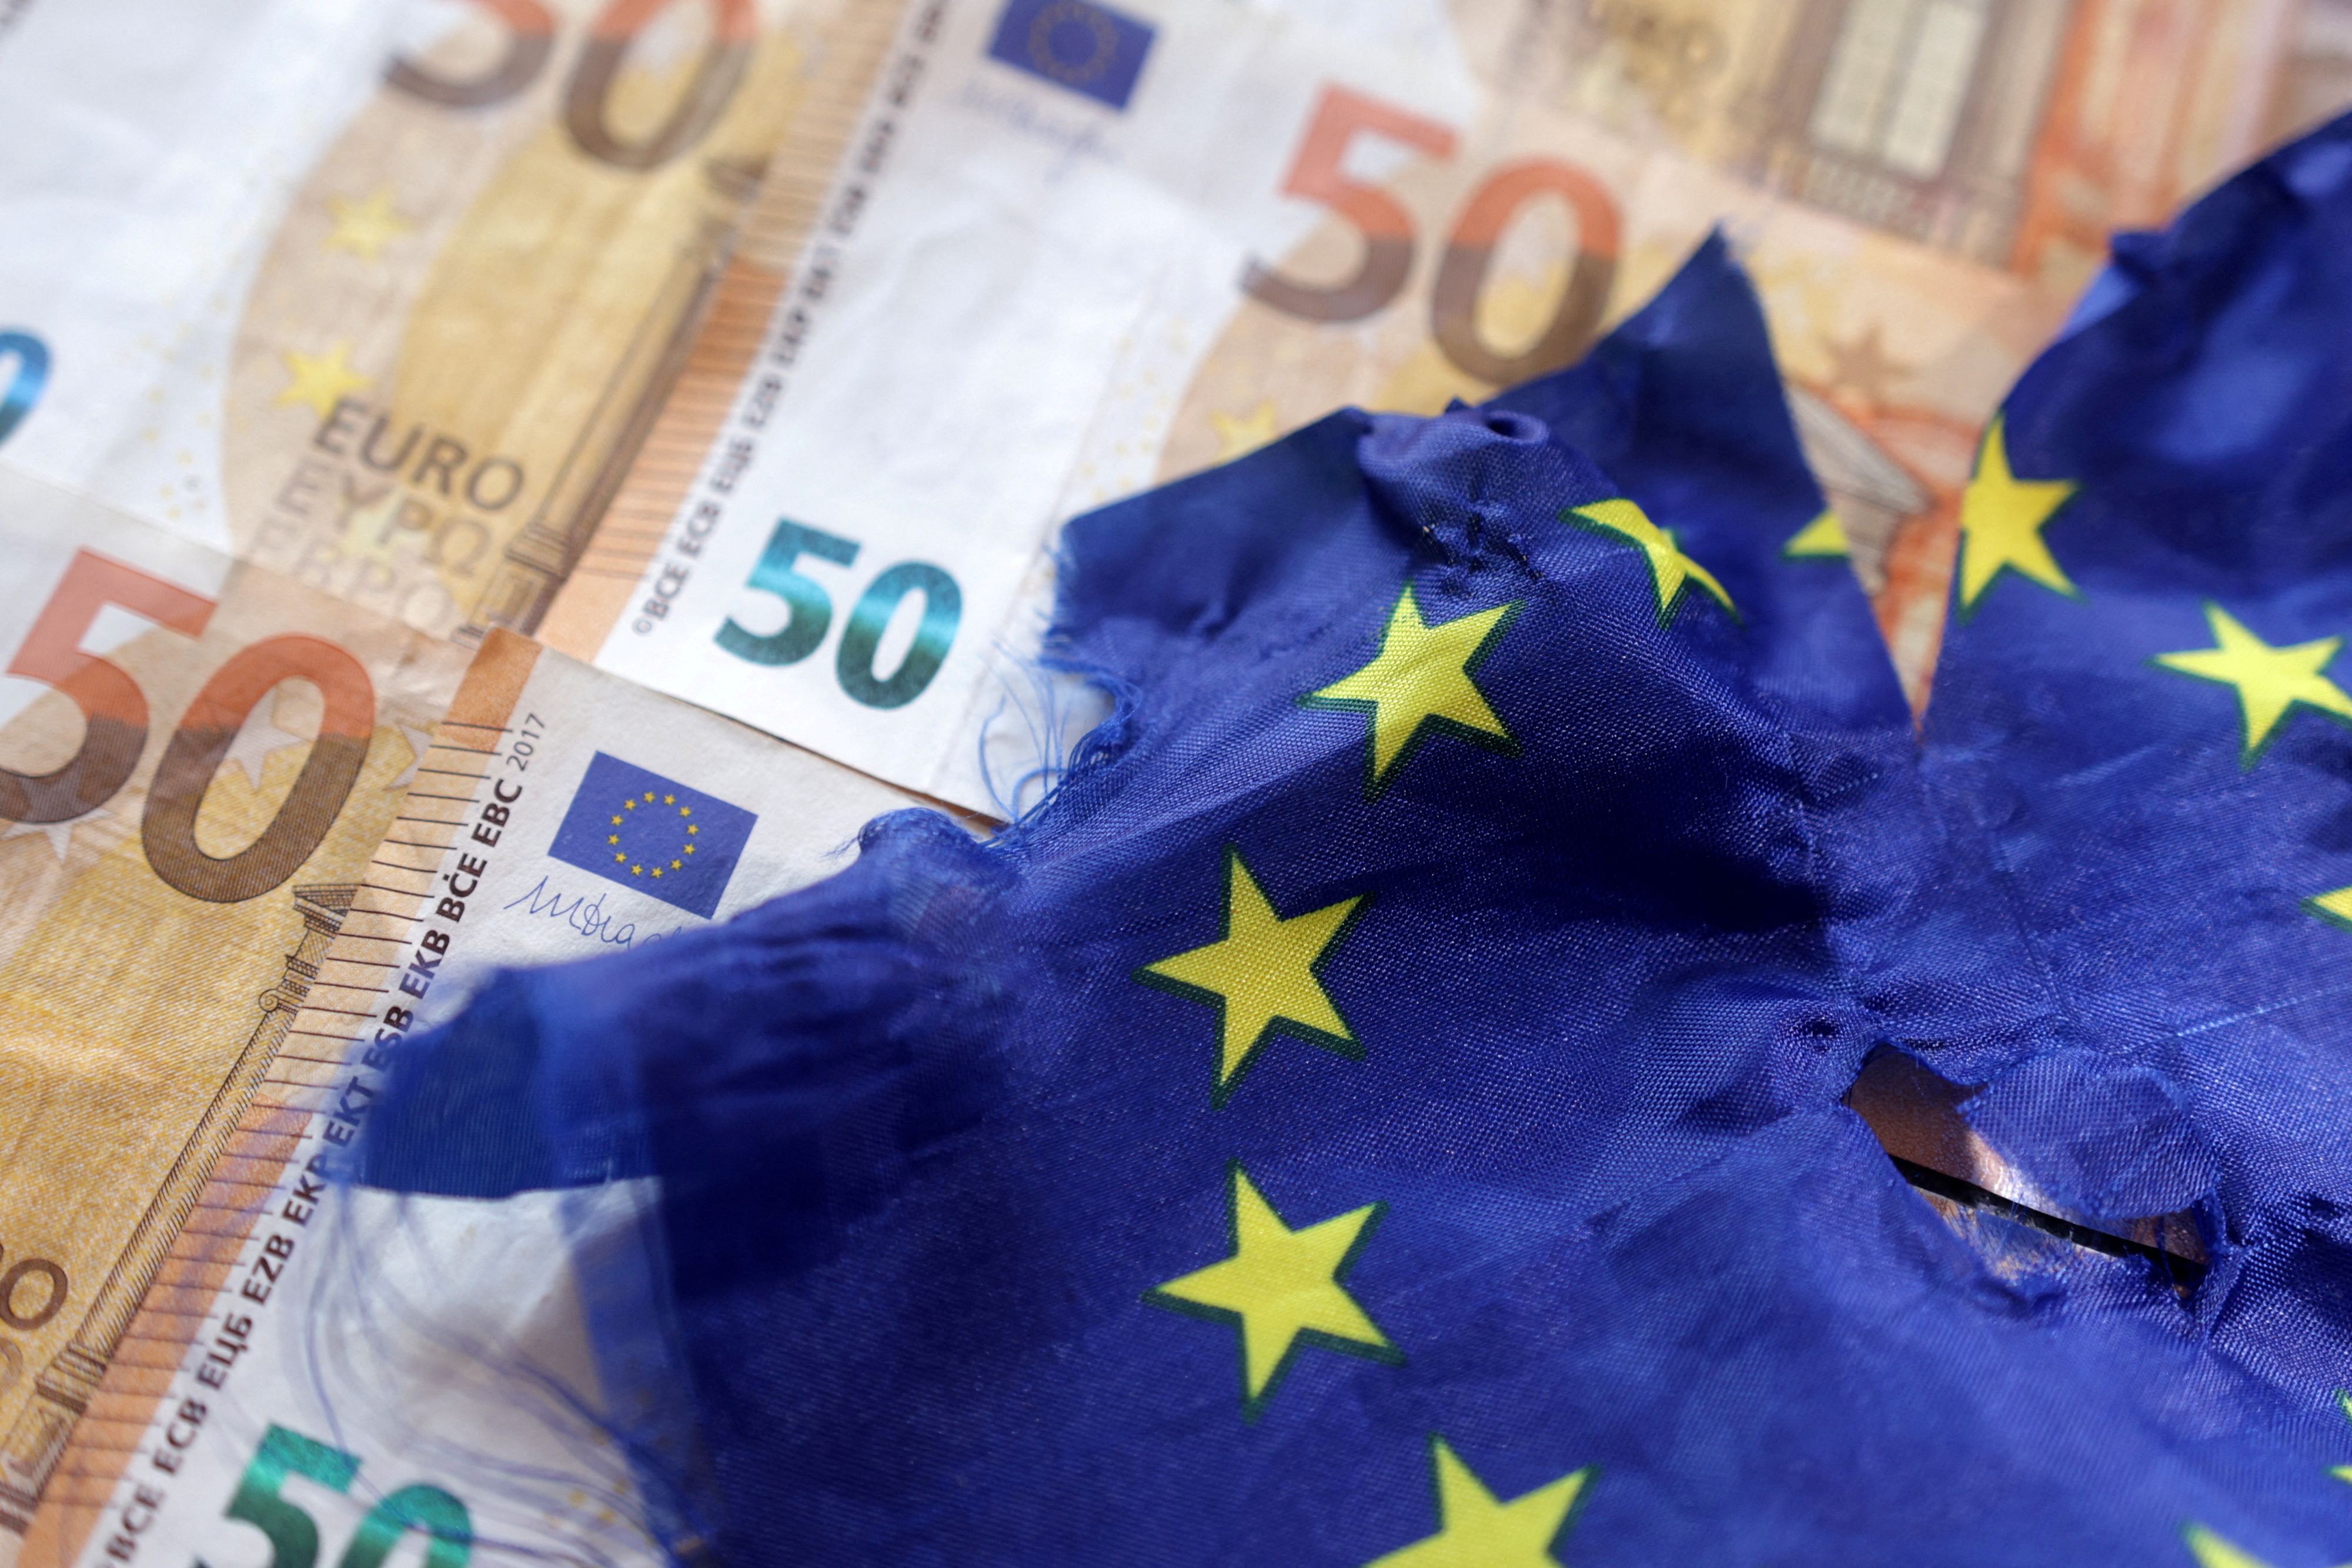 Illustration shows Euro banknotes and torn EU flag